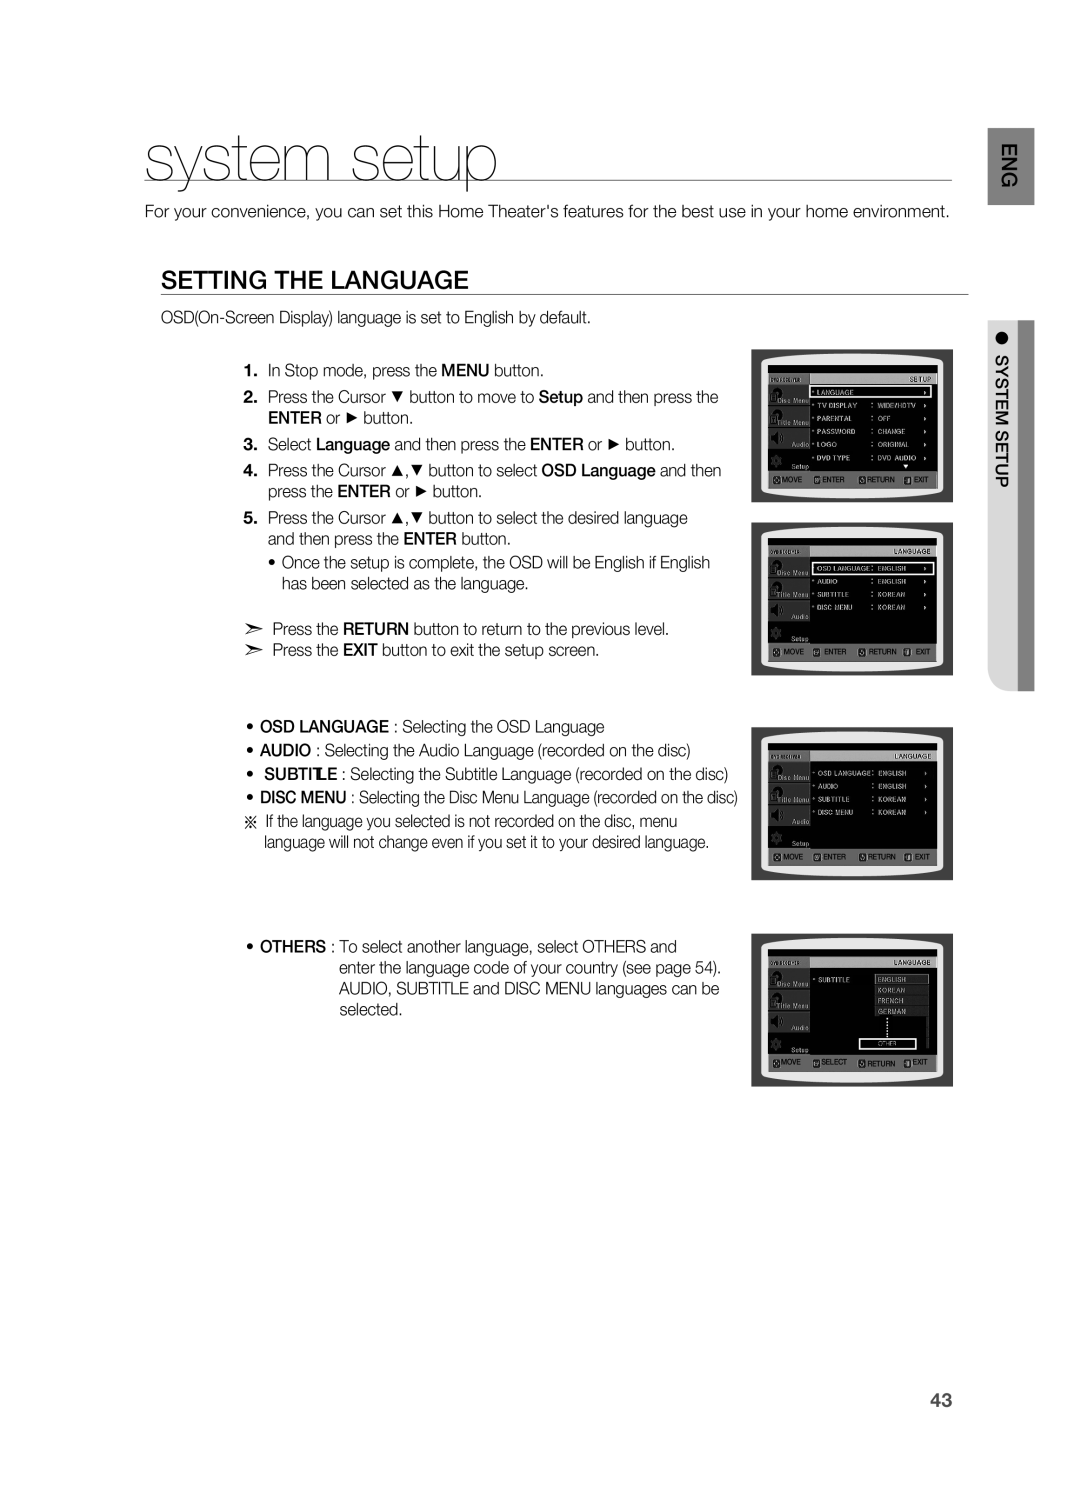 Sony HT-X810 user manual system setup, Setting the Language 